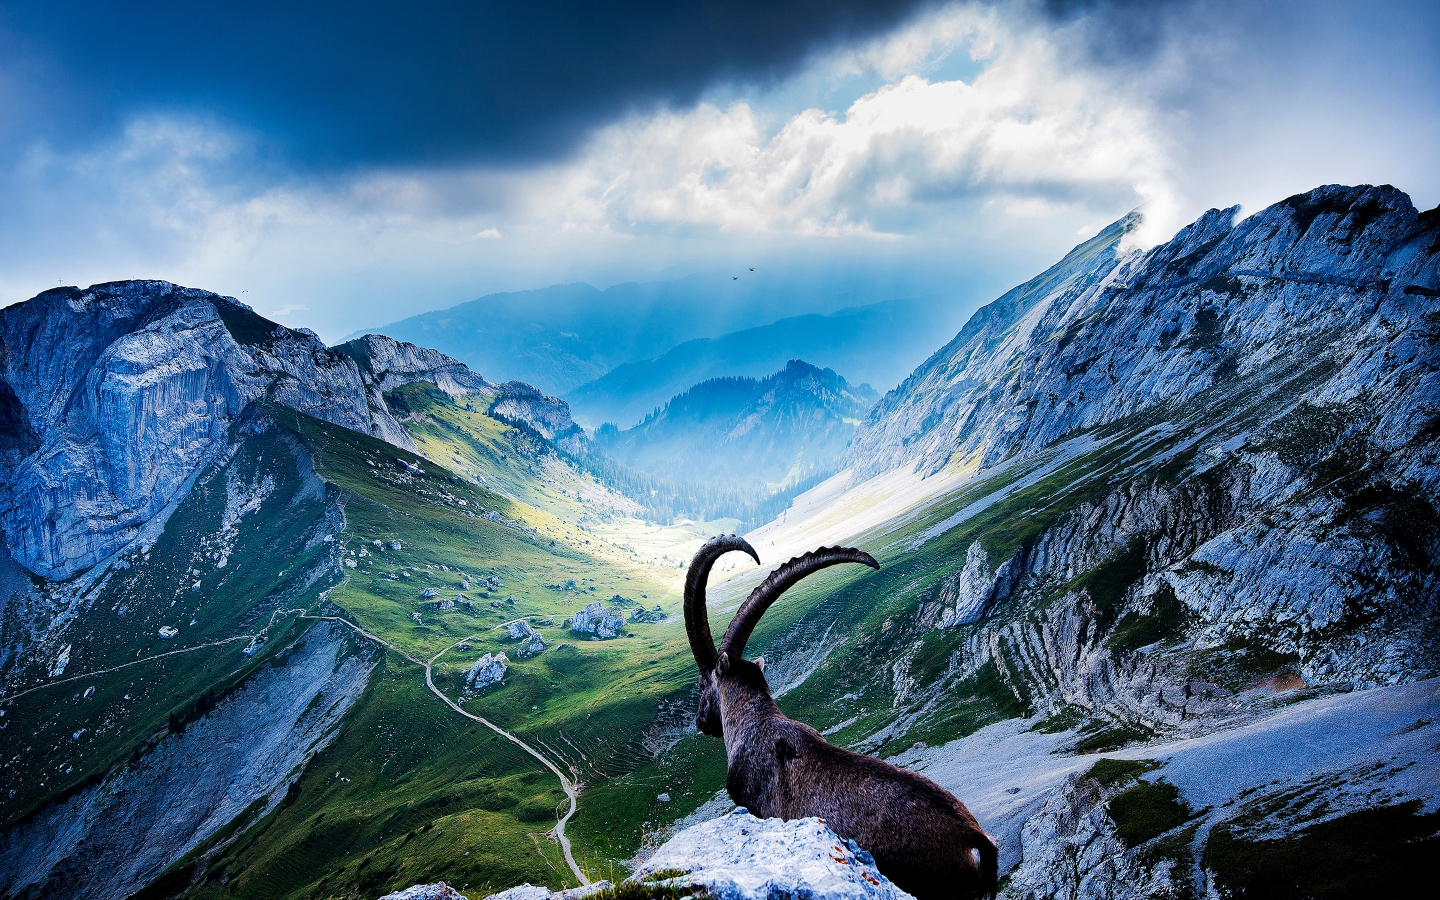 Goat at Mount Pilatus for 1440 x 900 widescreen resolution